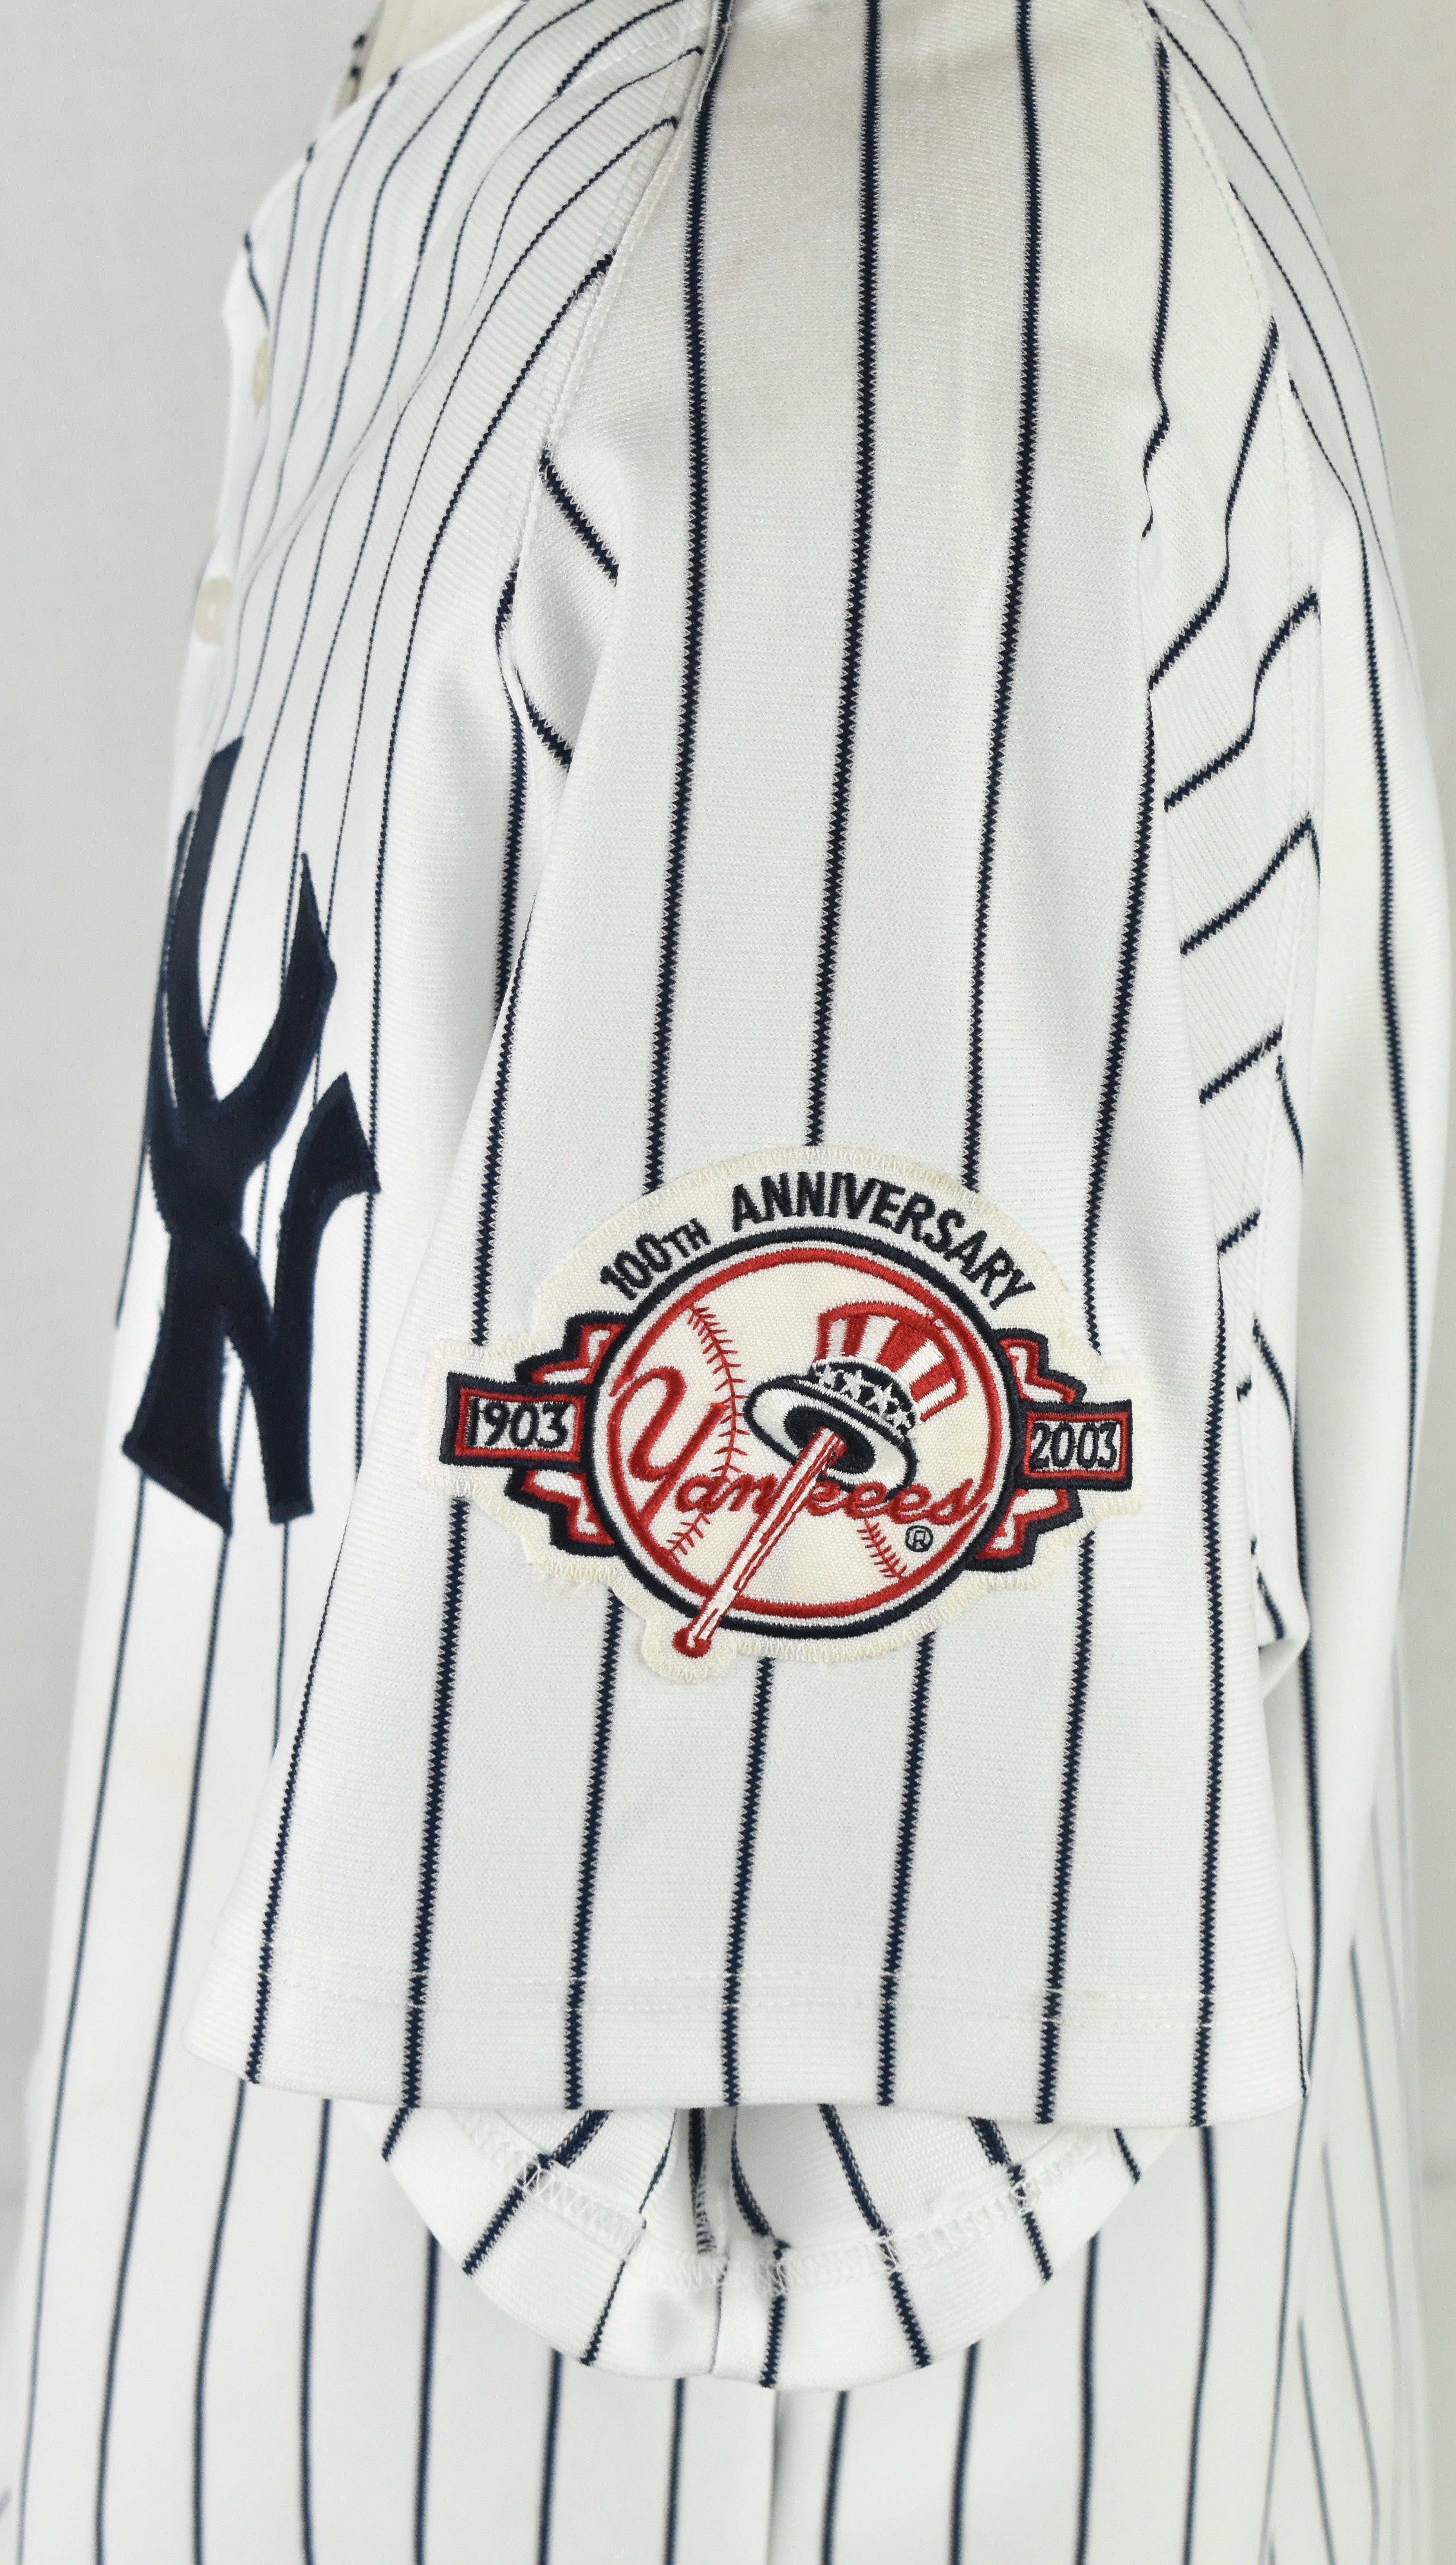 Derek Jeter Jersey - 2003 New York Yankees Away Throwback Baseball Jersey